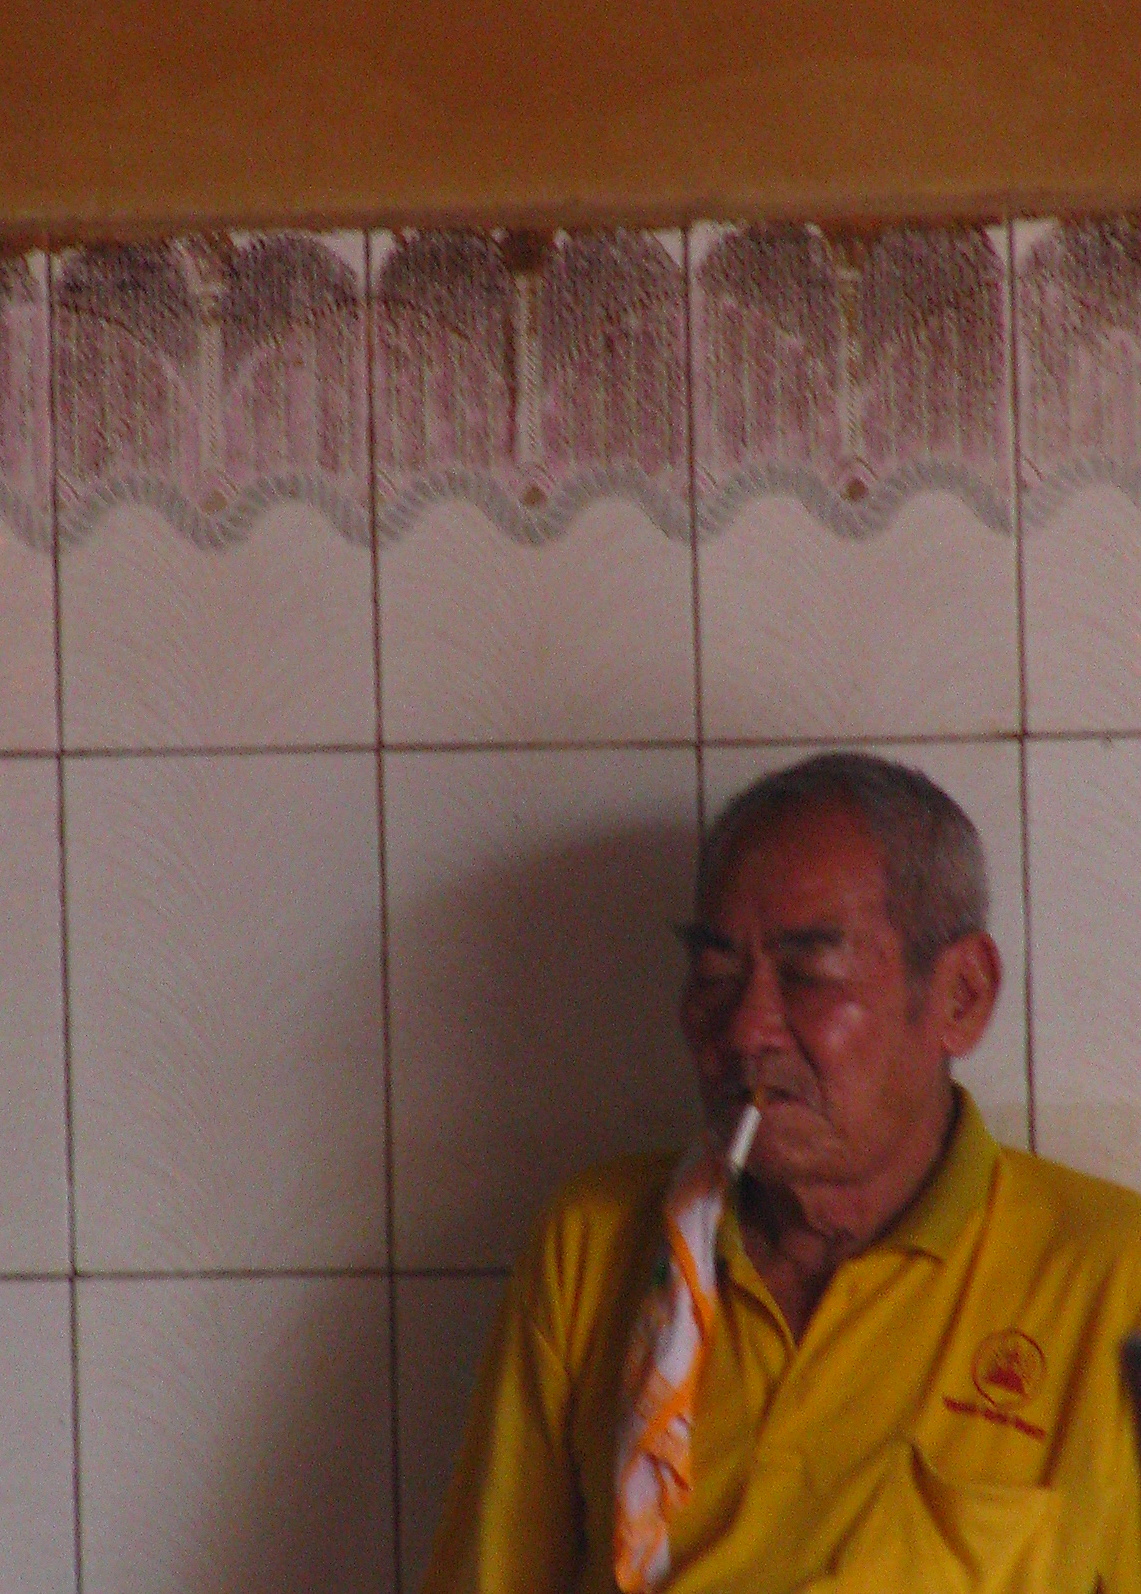 a man wearing a yellow shirt brushing his teeth